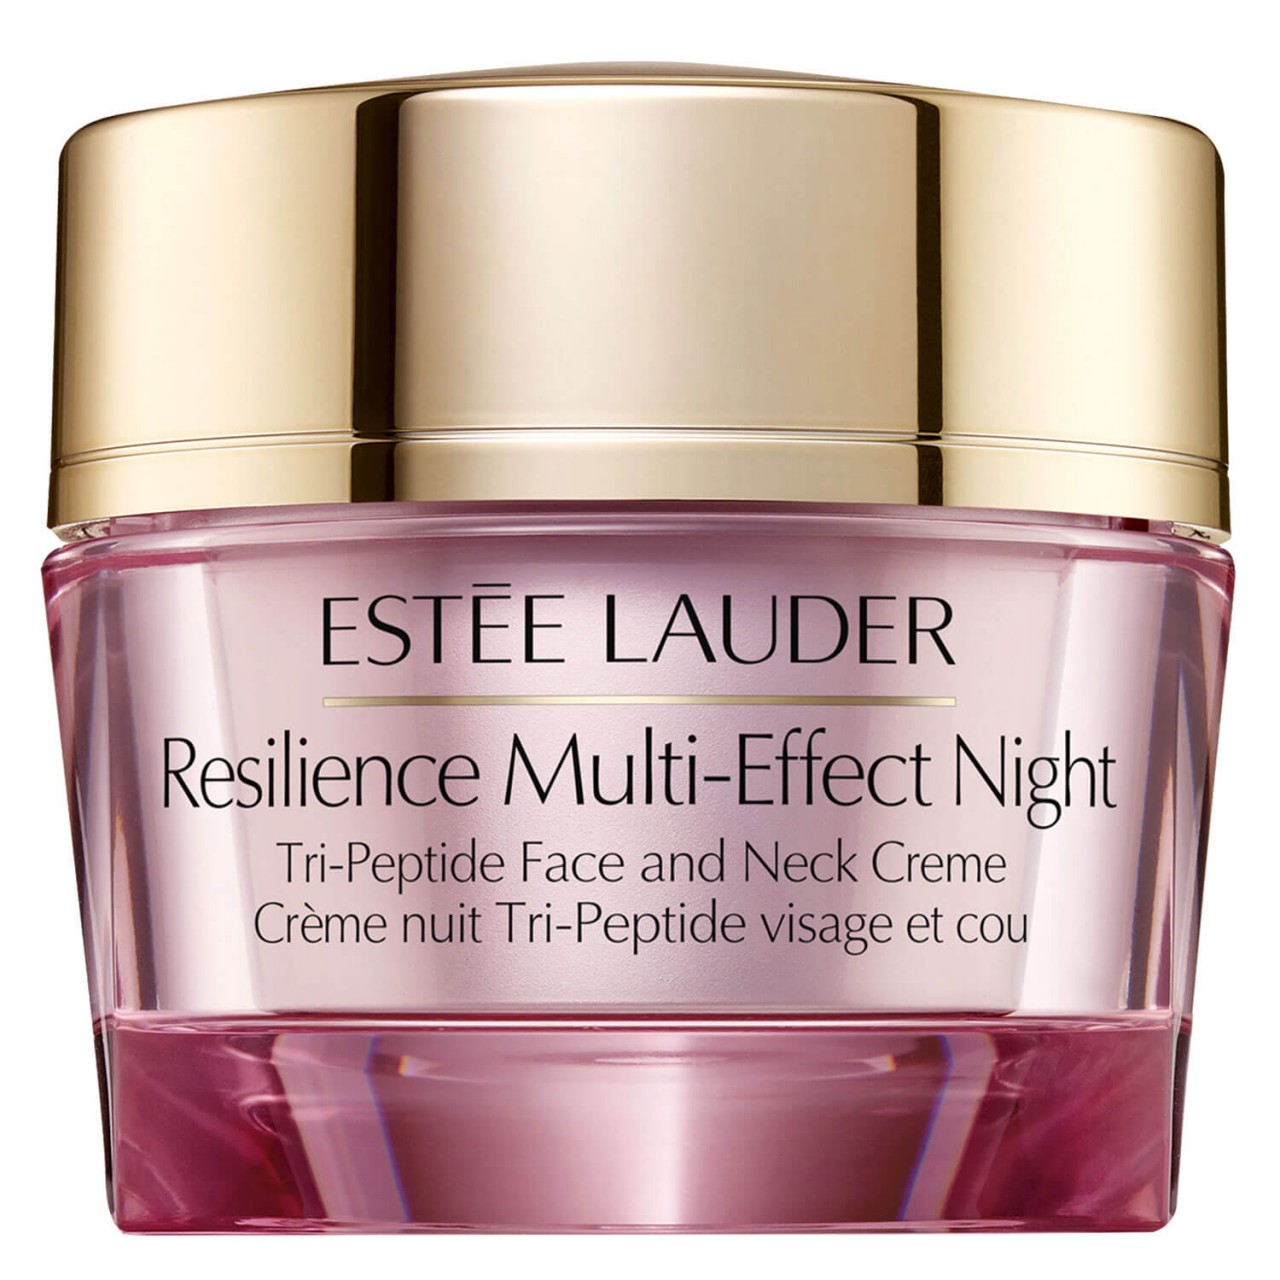 Estee Lauder - Resilience Multi-Effect Night